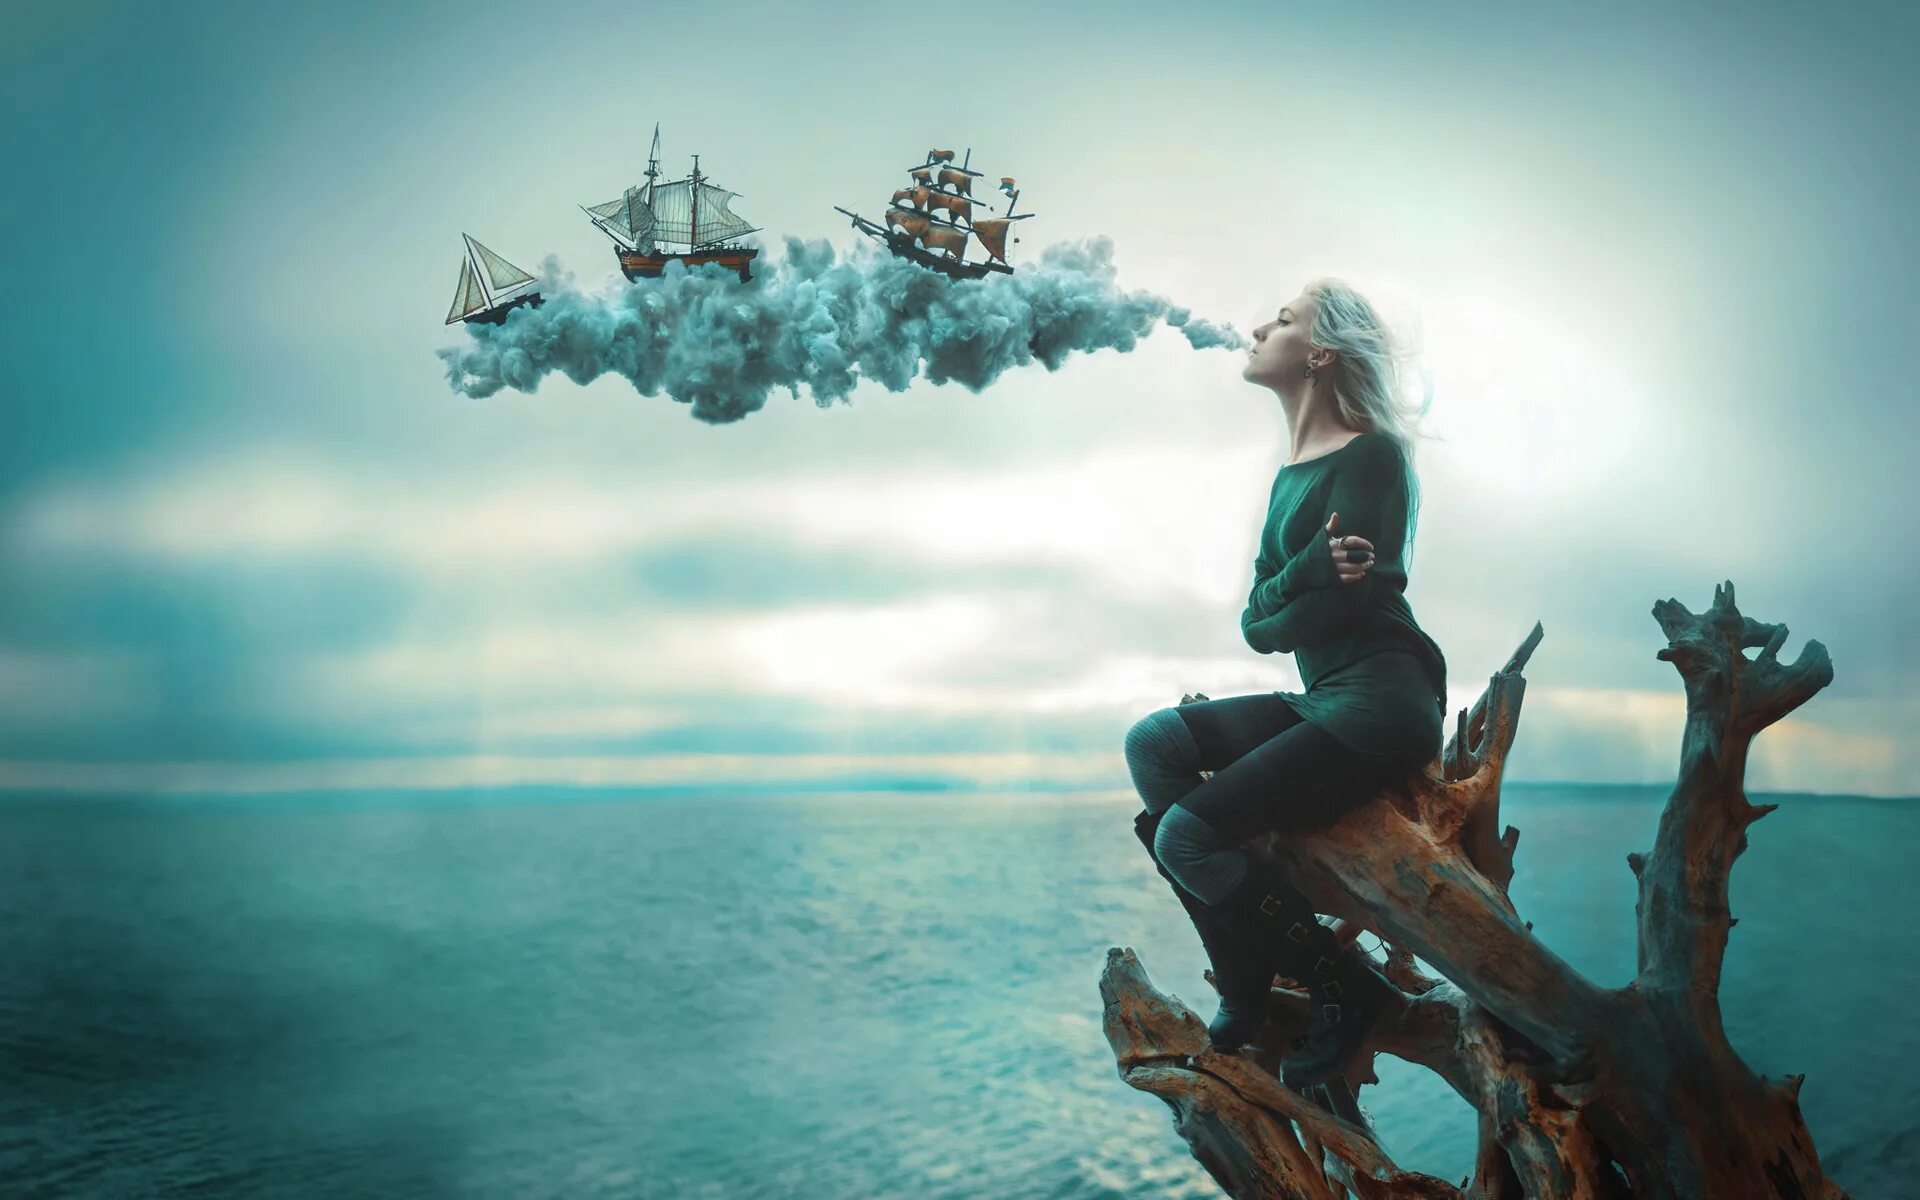 Девушка на корабле. Девушка-море. Фотосессия в стиле фантастика. Фантастическое море. Красивые обои человека